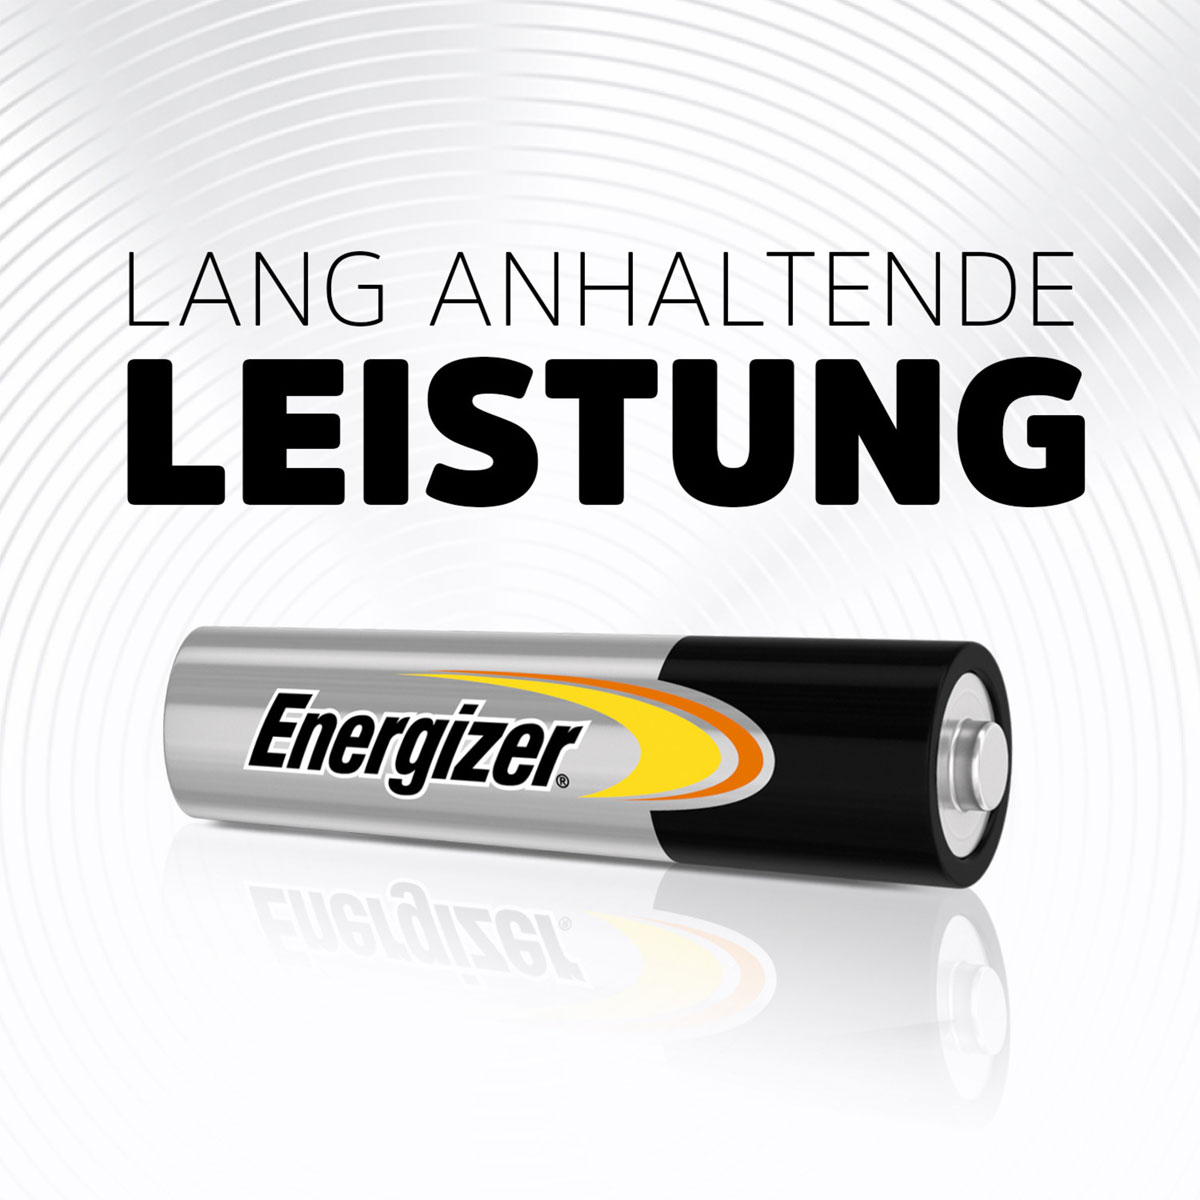 Energizer AAA-Batterie Alkaline Power Maxi-Pack 24 Stk. | 253060